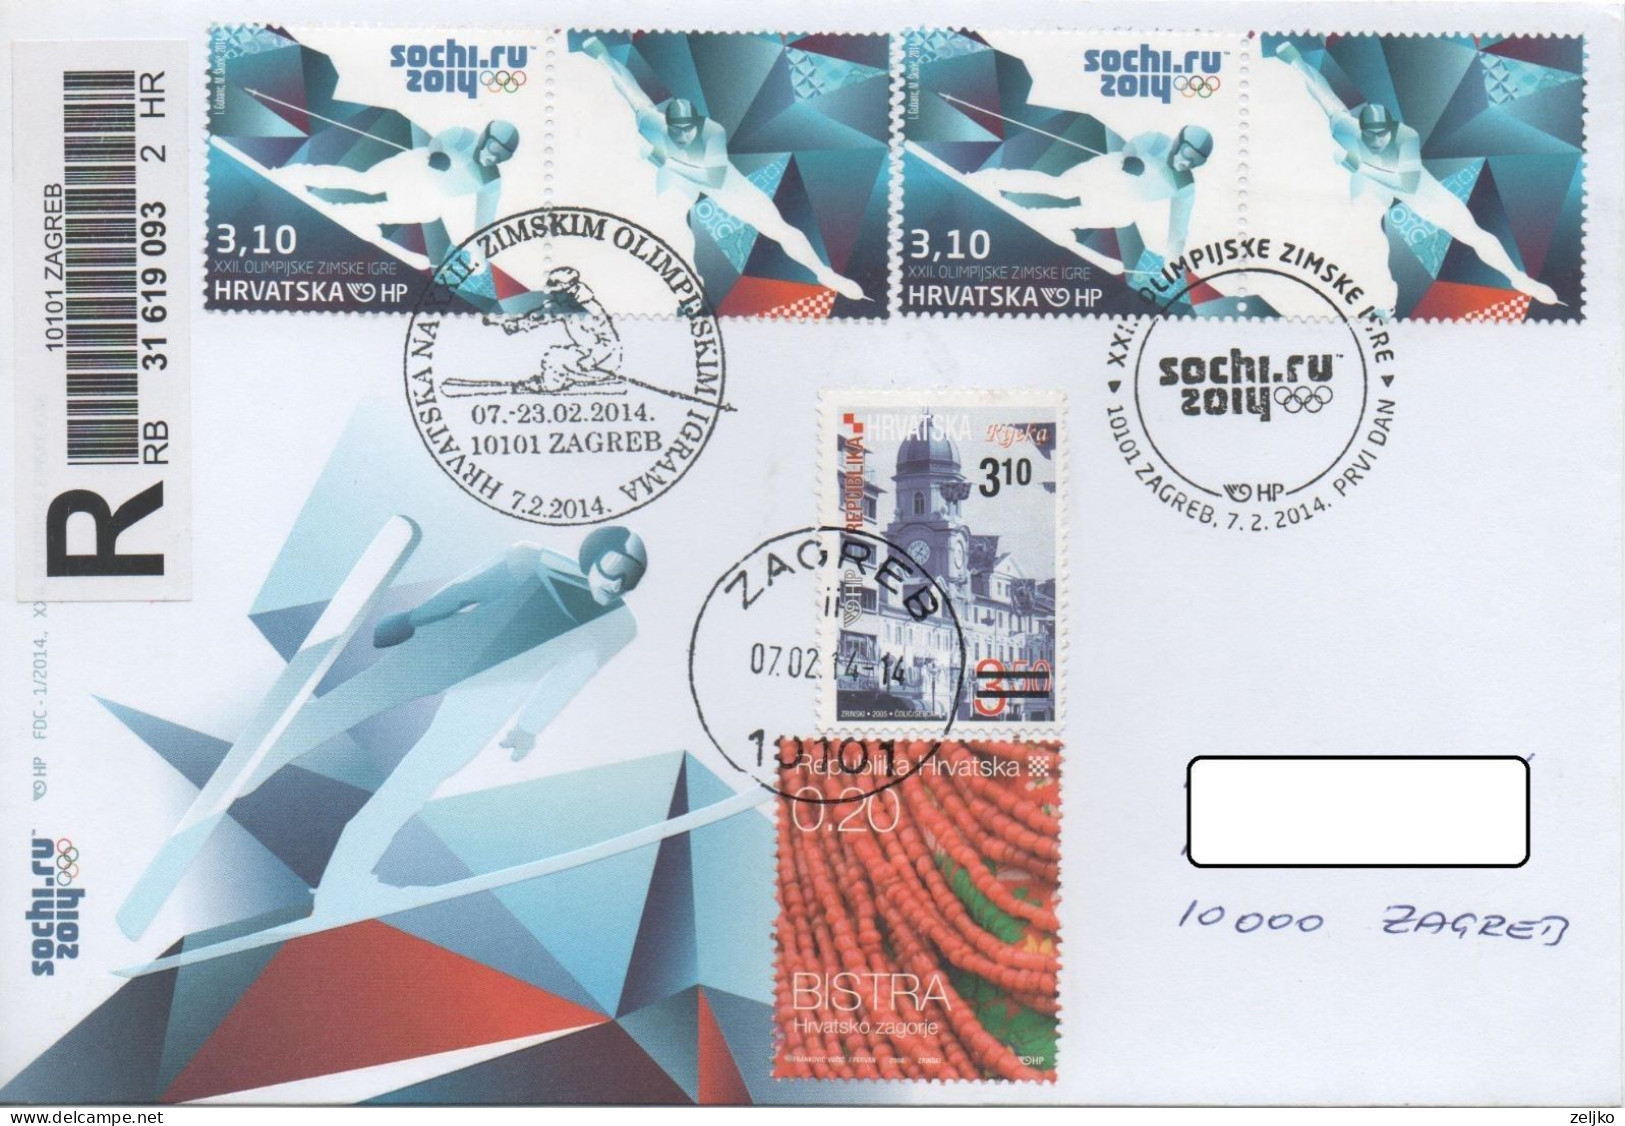 Croatia, Winter Olympic Games 2014 Sochi Russia,Michel 1110, Uprated Registered FDC, Stamp + Vignette, 2 Spec. Cancels - Invierno 2014: Sotchi